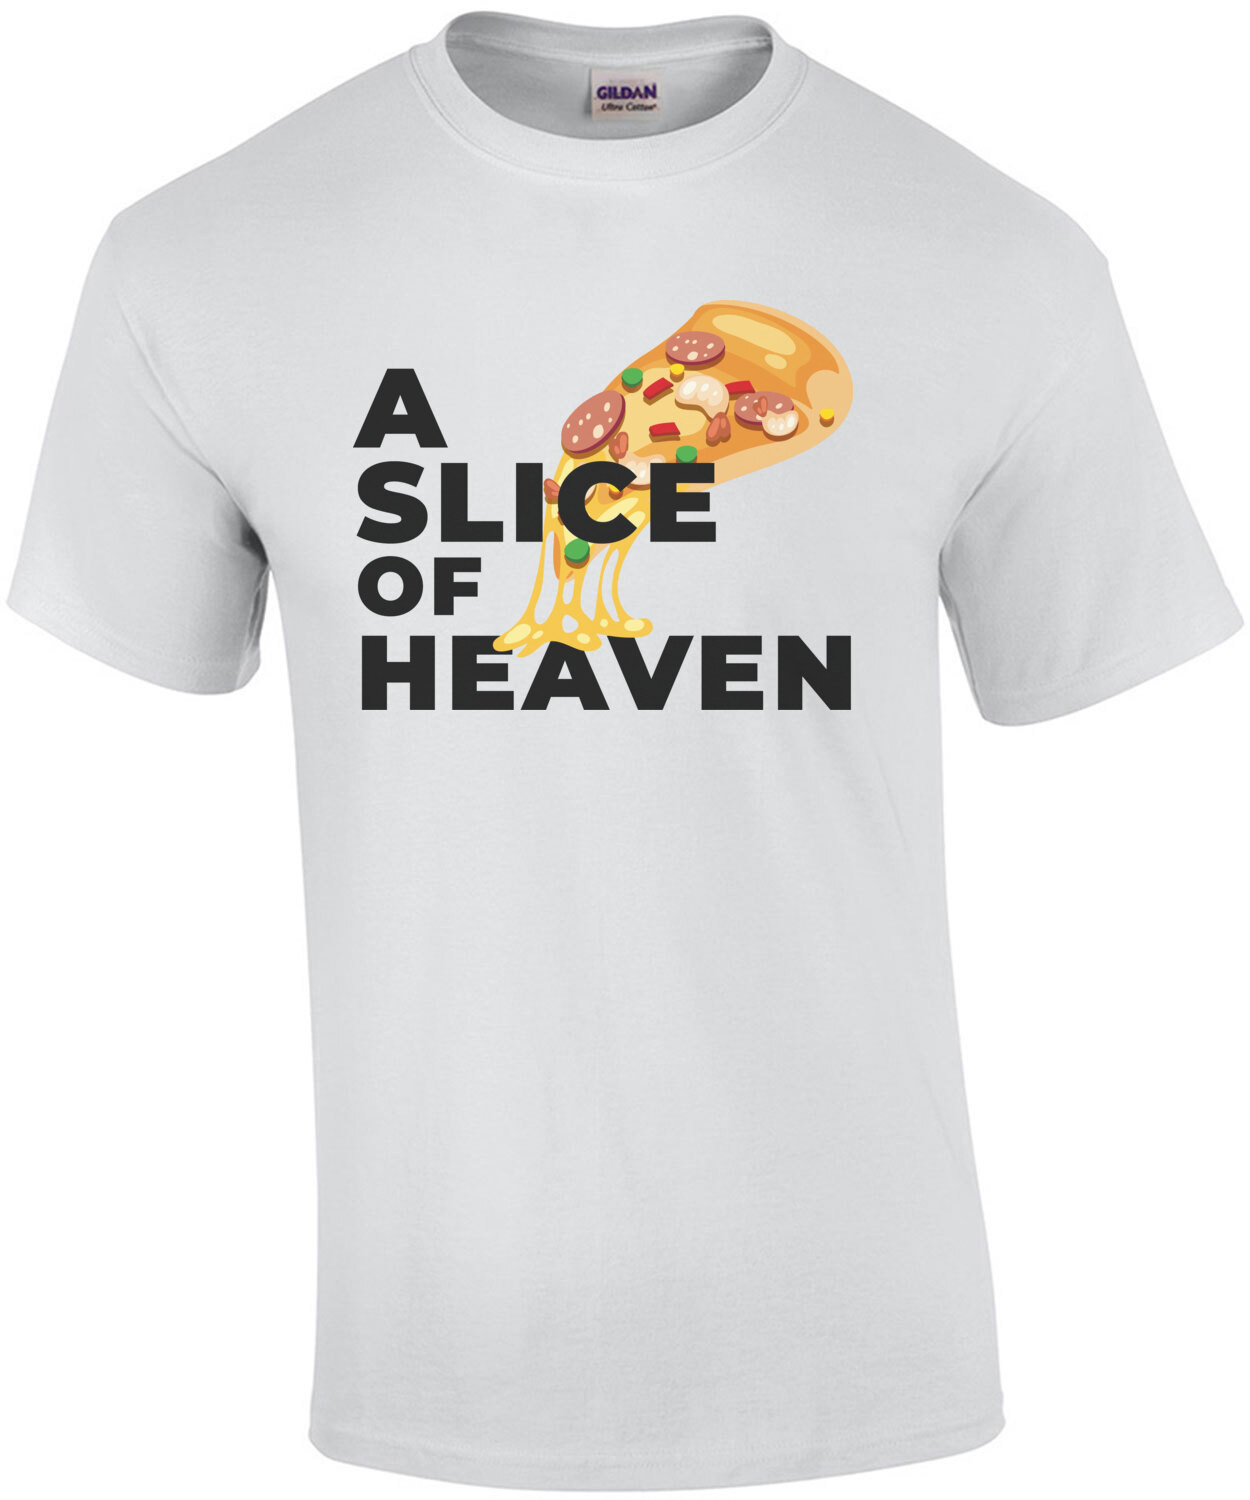 A Slice of Heaven - Mystic Pizza - 80's T-Shirt